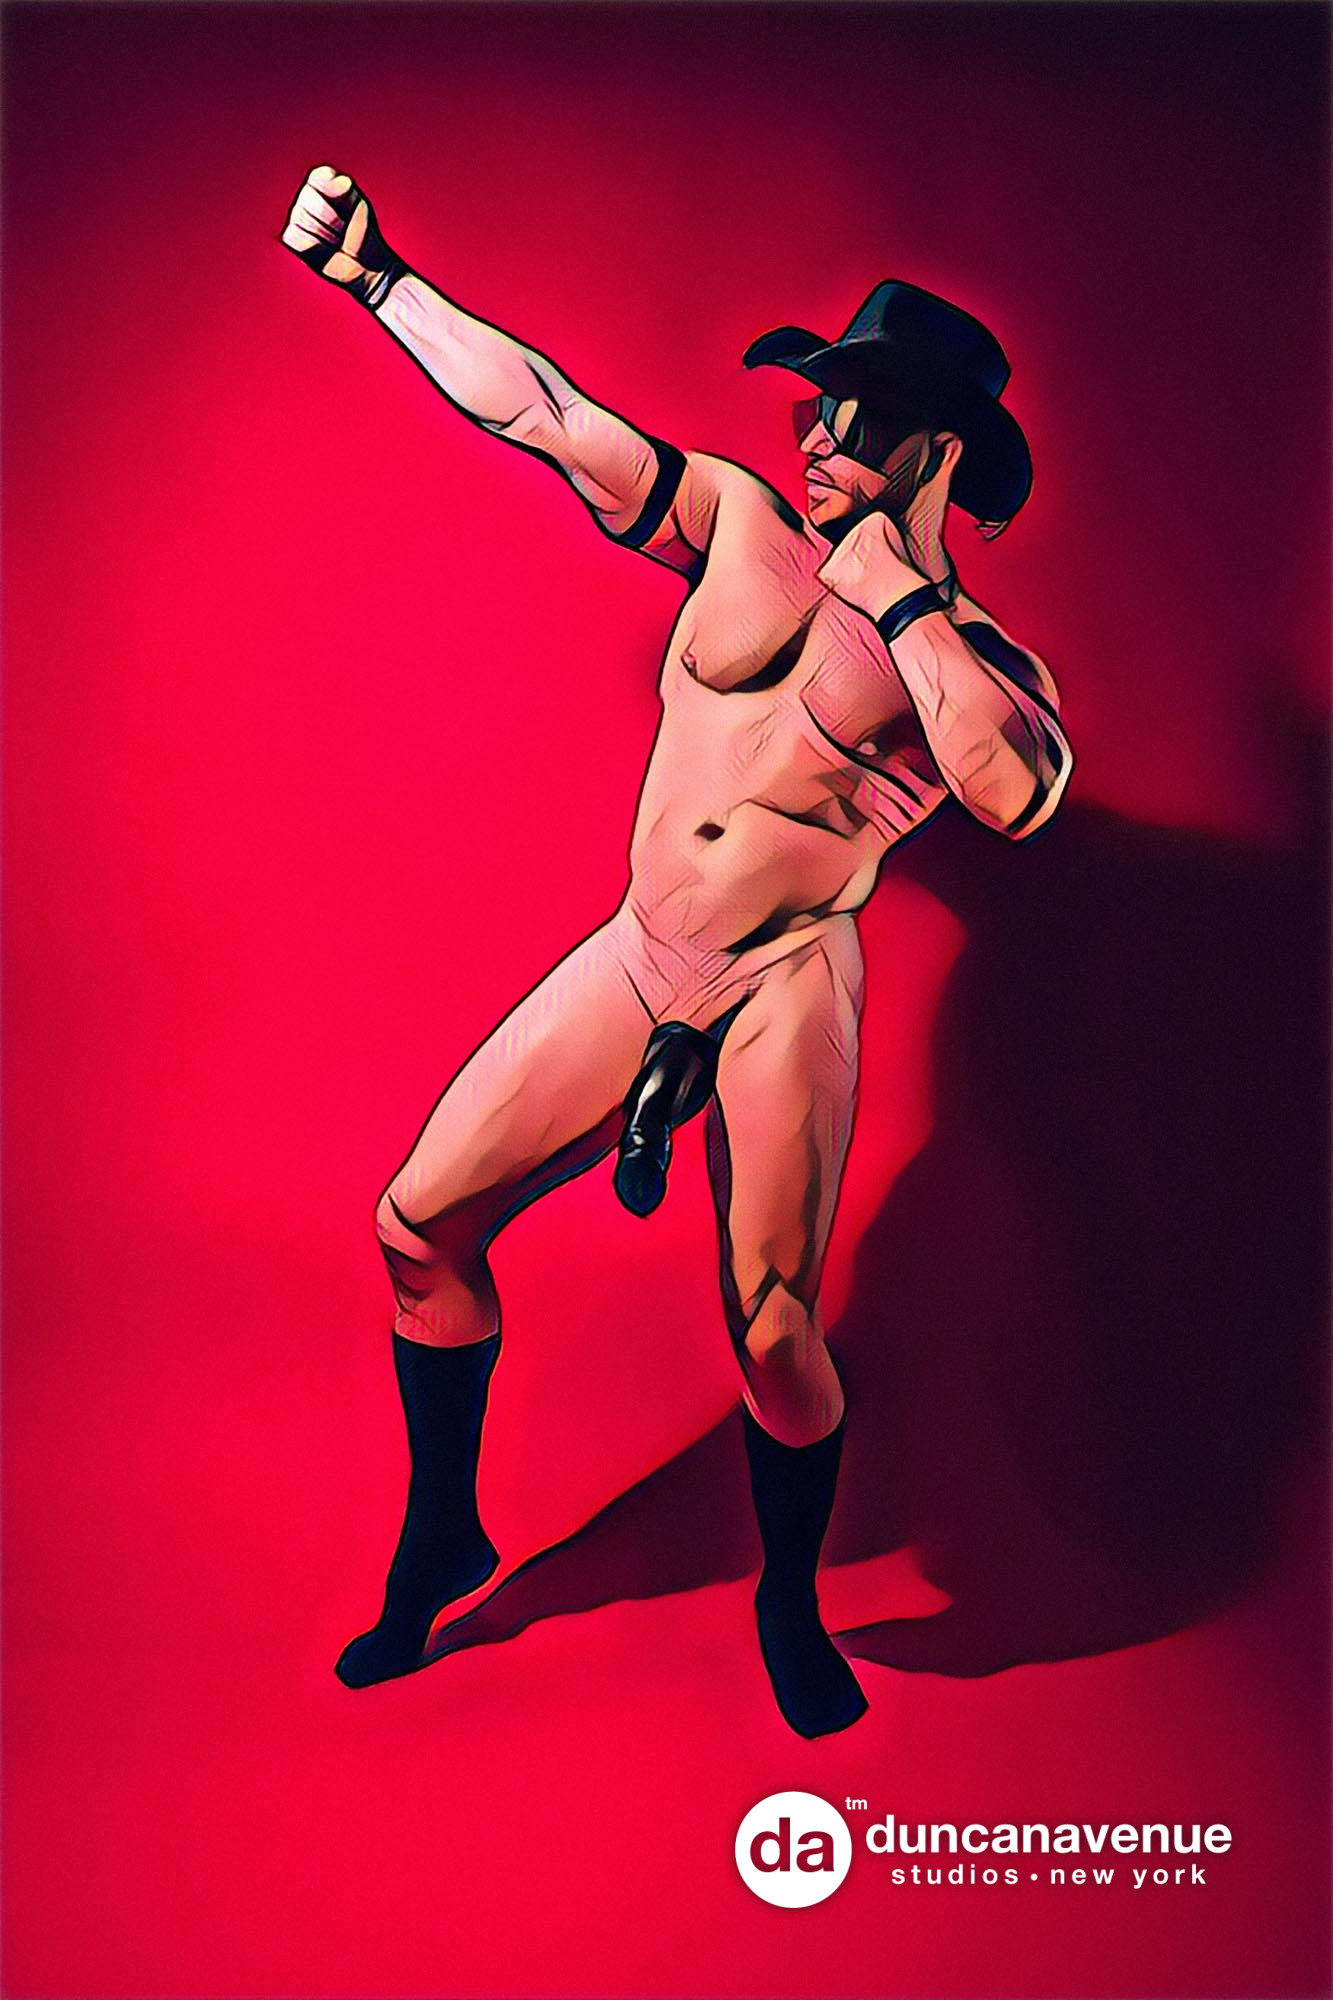 Breaking Boundaries in Brilliant Bites: The HARD NEW YORK Queer Art Gallery Presents Maxwell Alexander's "Homoerotic Abstractions"